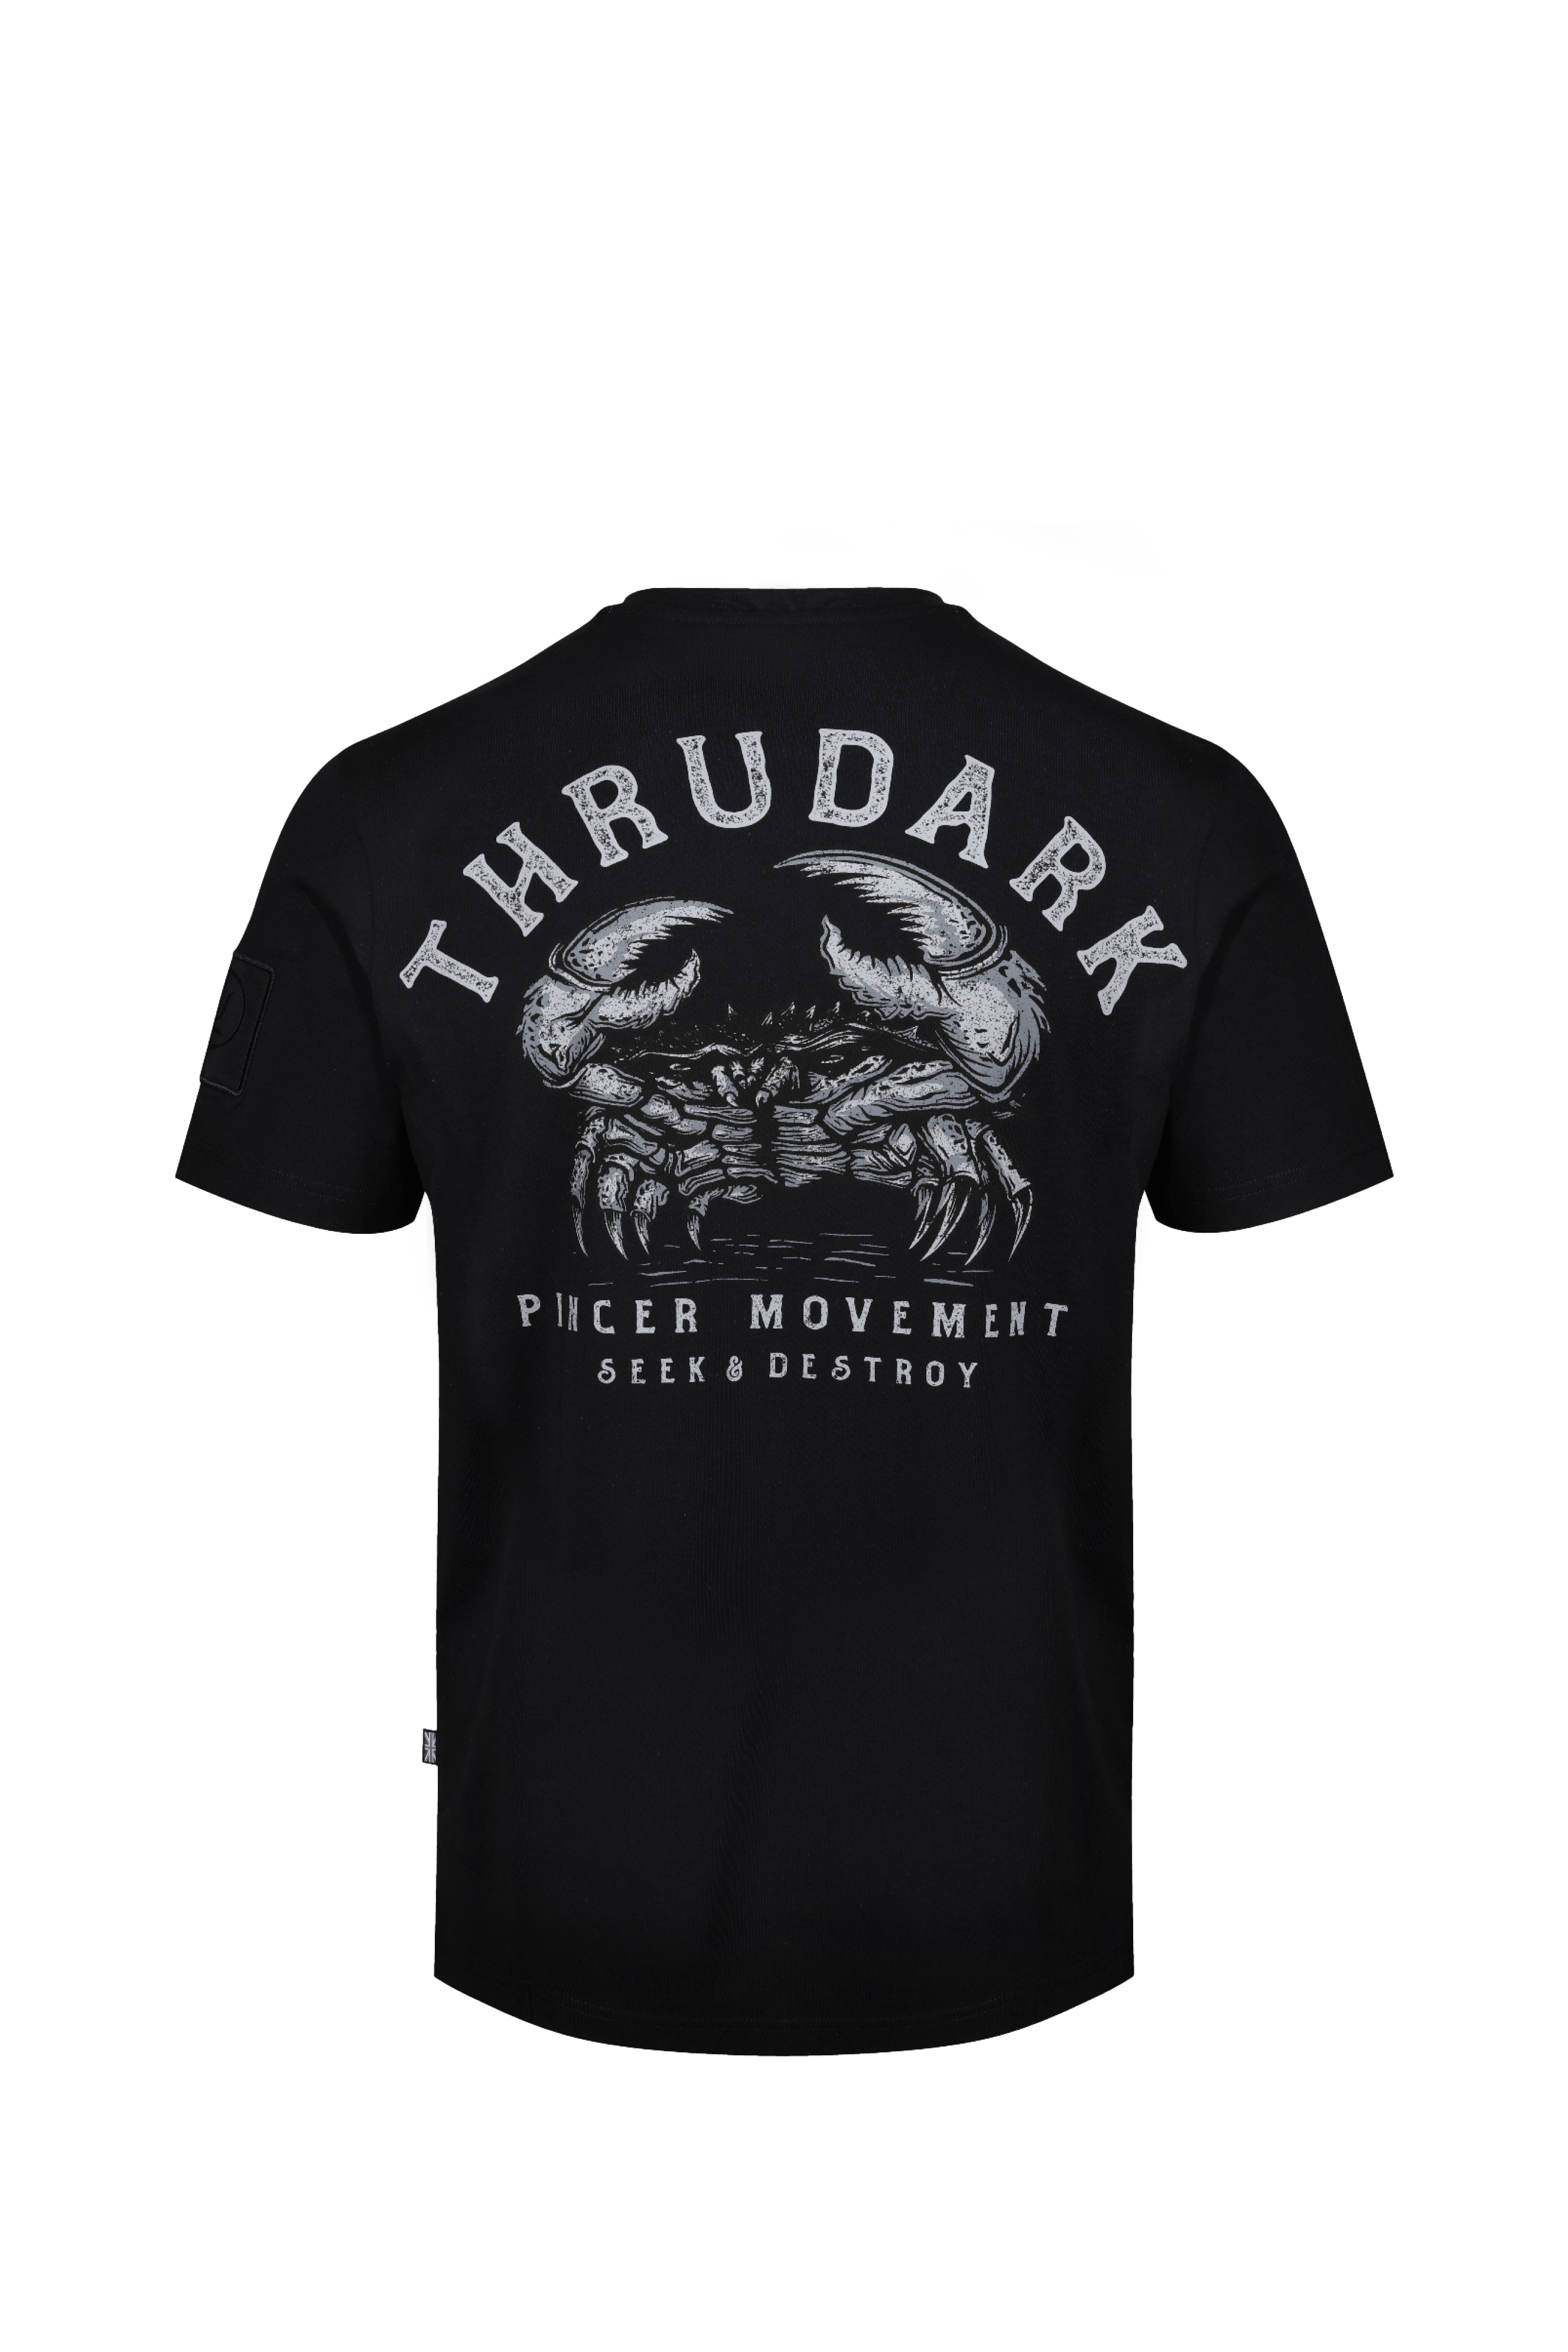 Thrudark  Insignia T-shirt - Pincer Movement Large